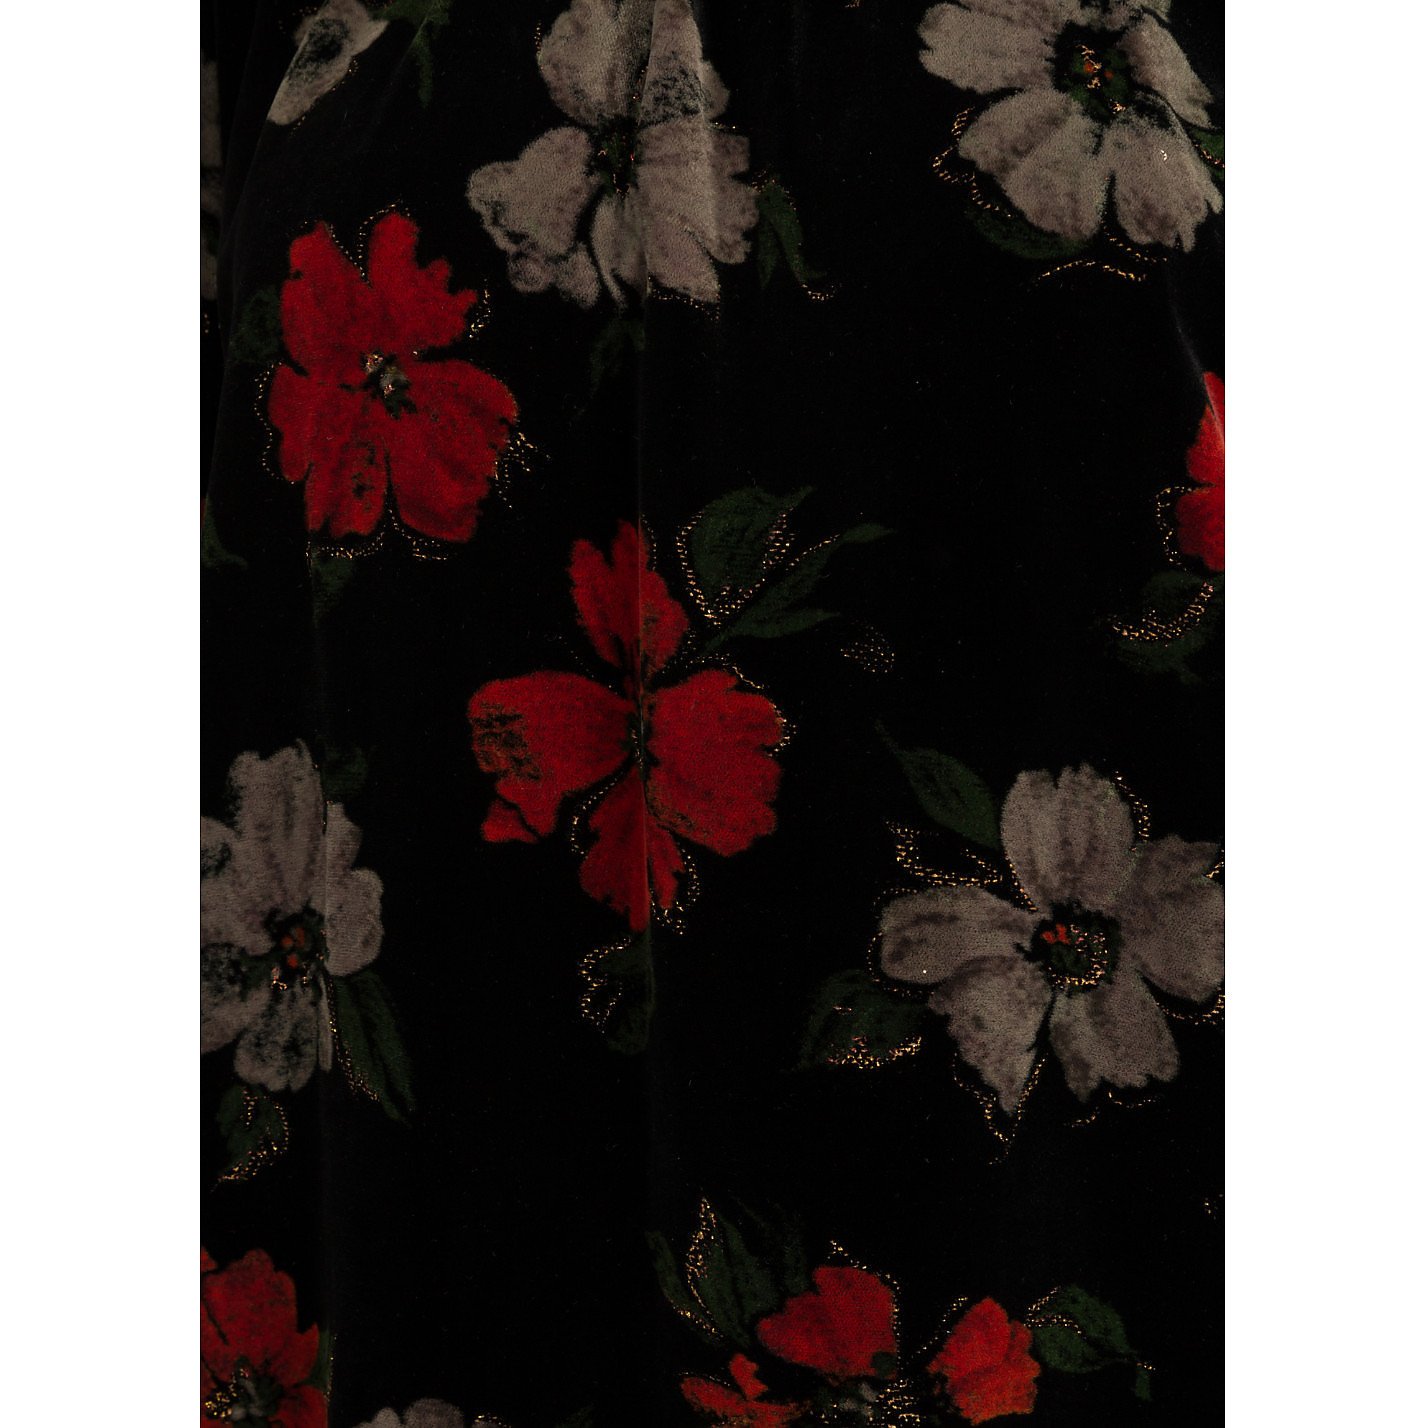 Lindka Cierach Floral Velvet Tunic Dress